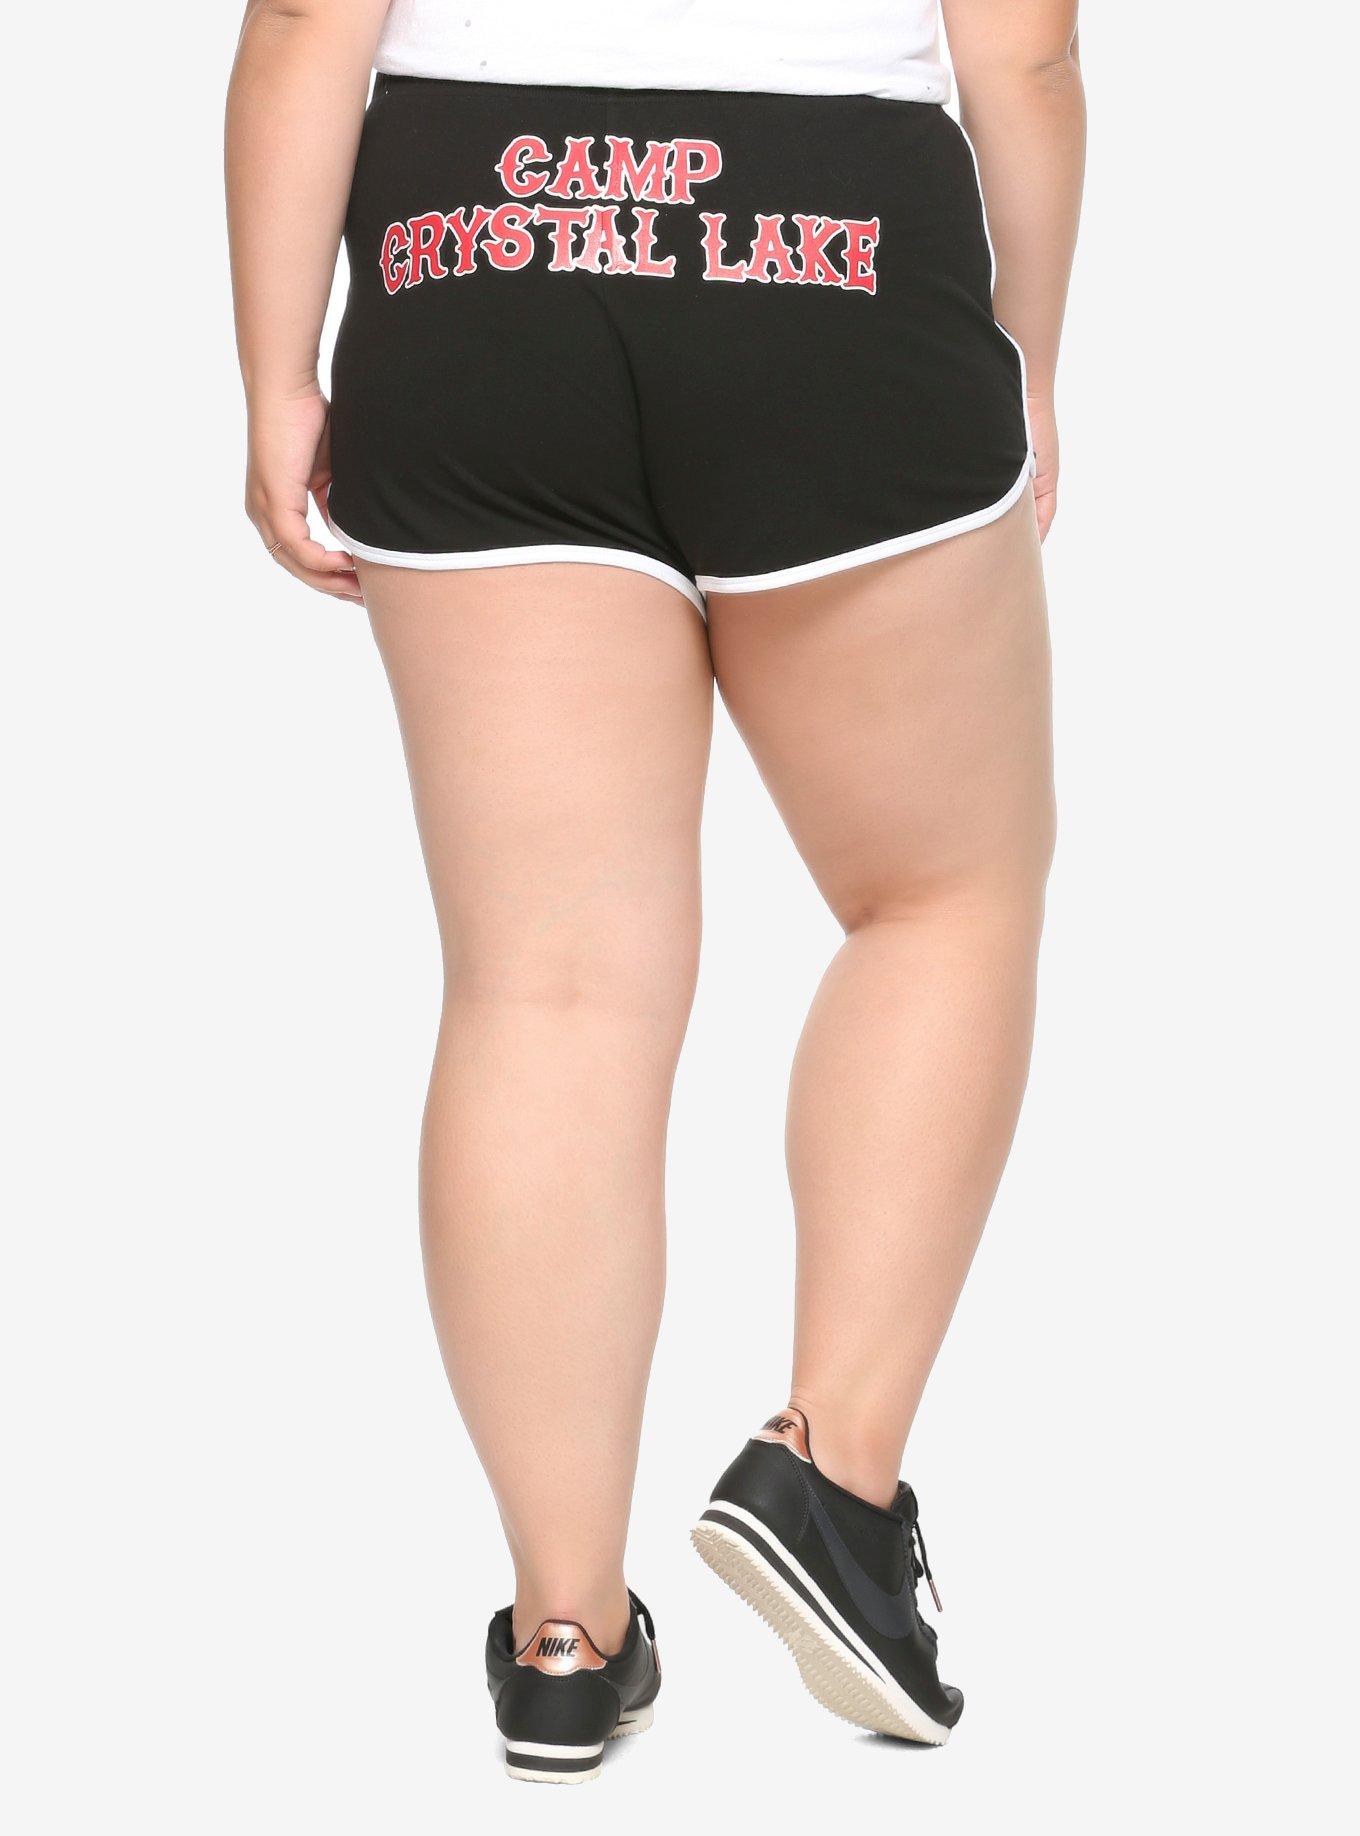 Friday The 13th Camp Crystal Lake Girls Soft Shorts Plus Size, BLACK, alternate